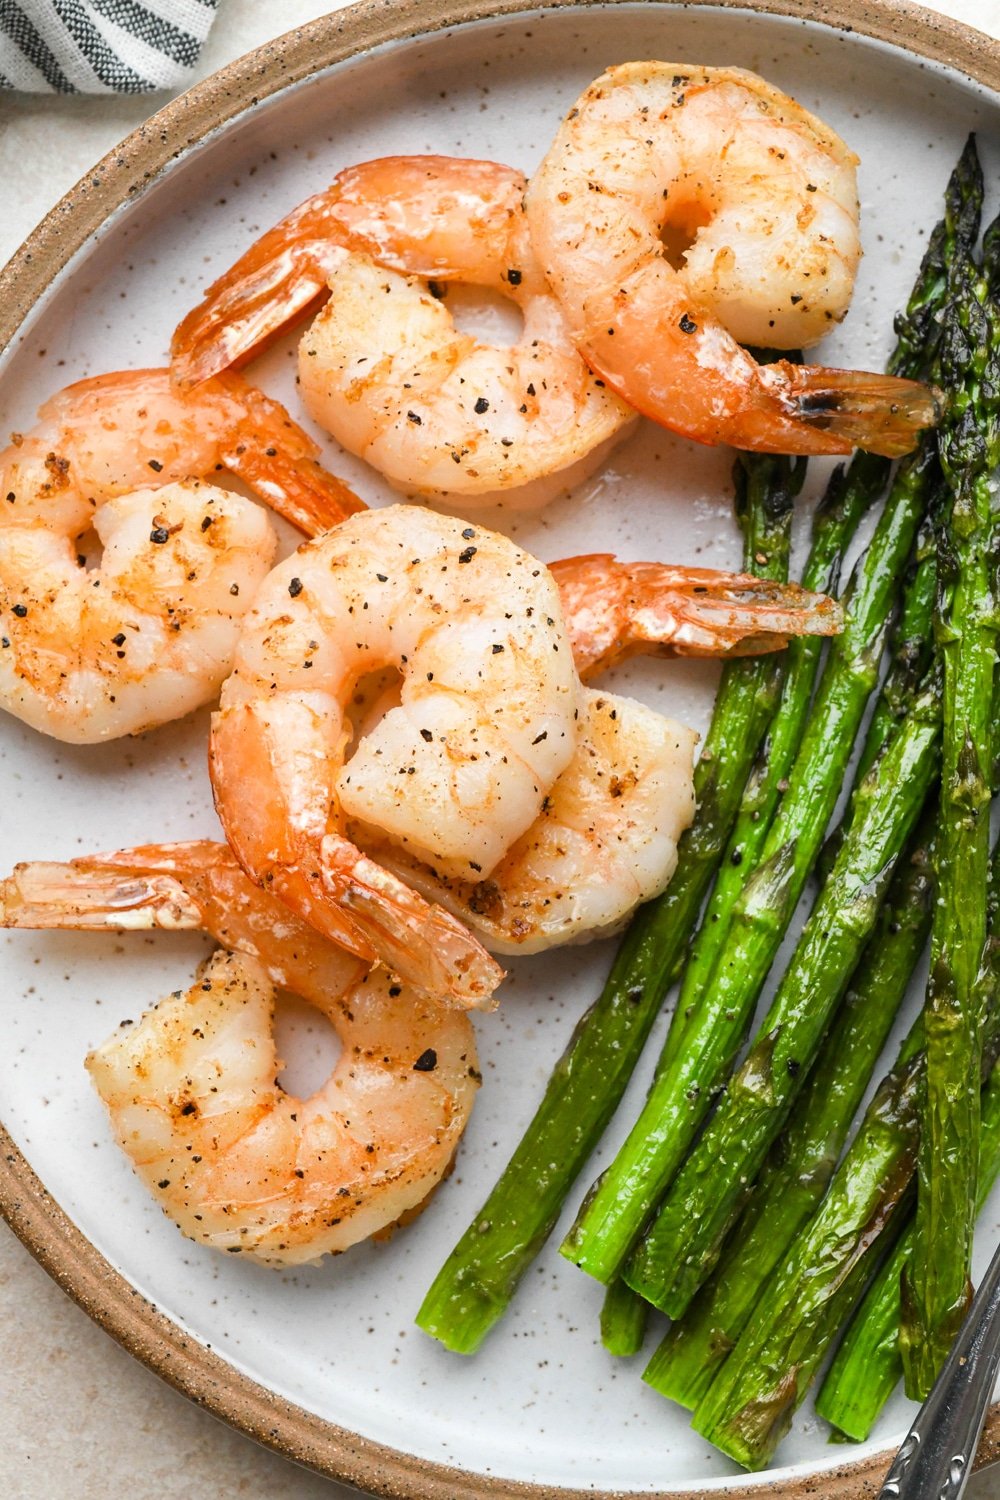 Six pan seared shrimp on a ceramic plate with roasted asparagusl